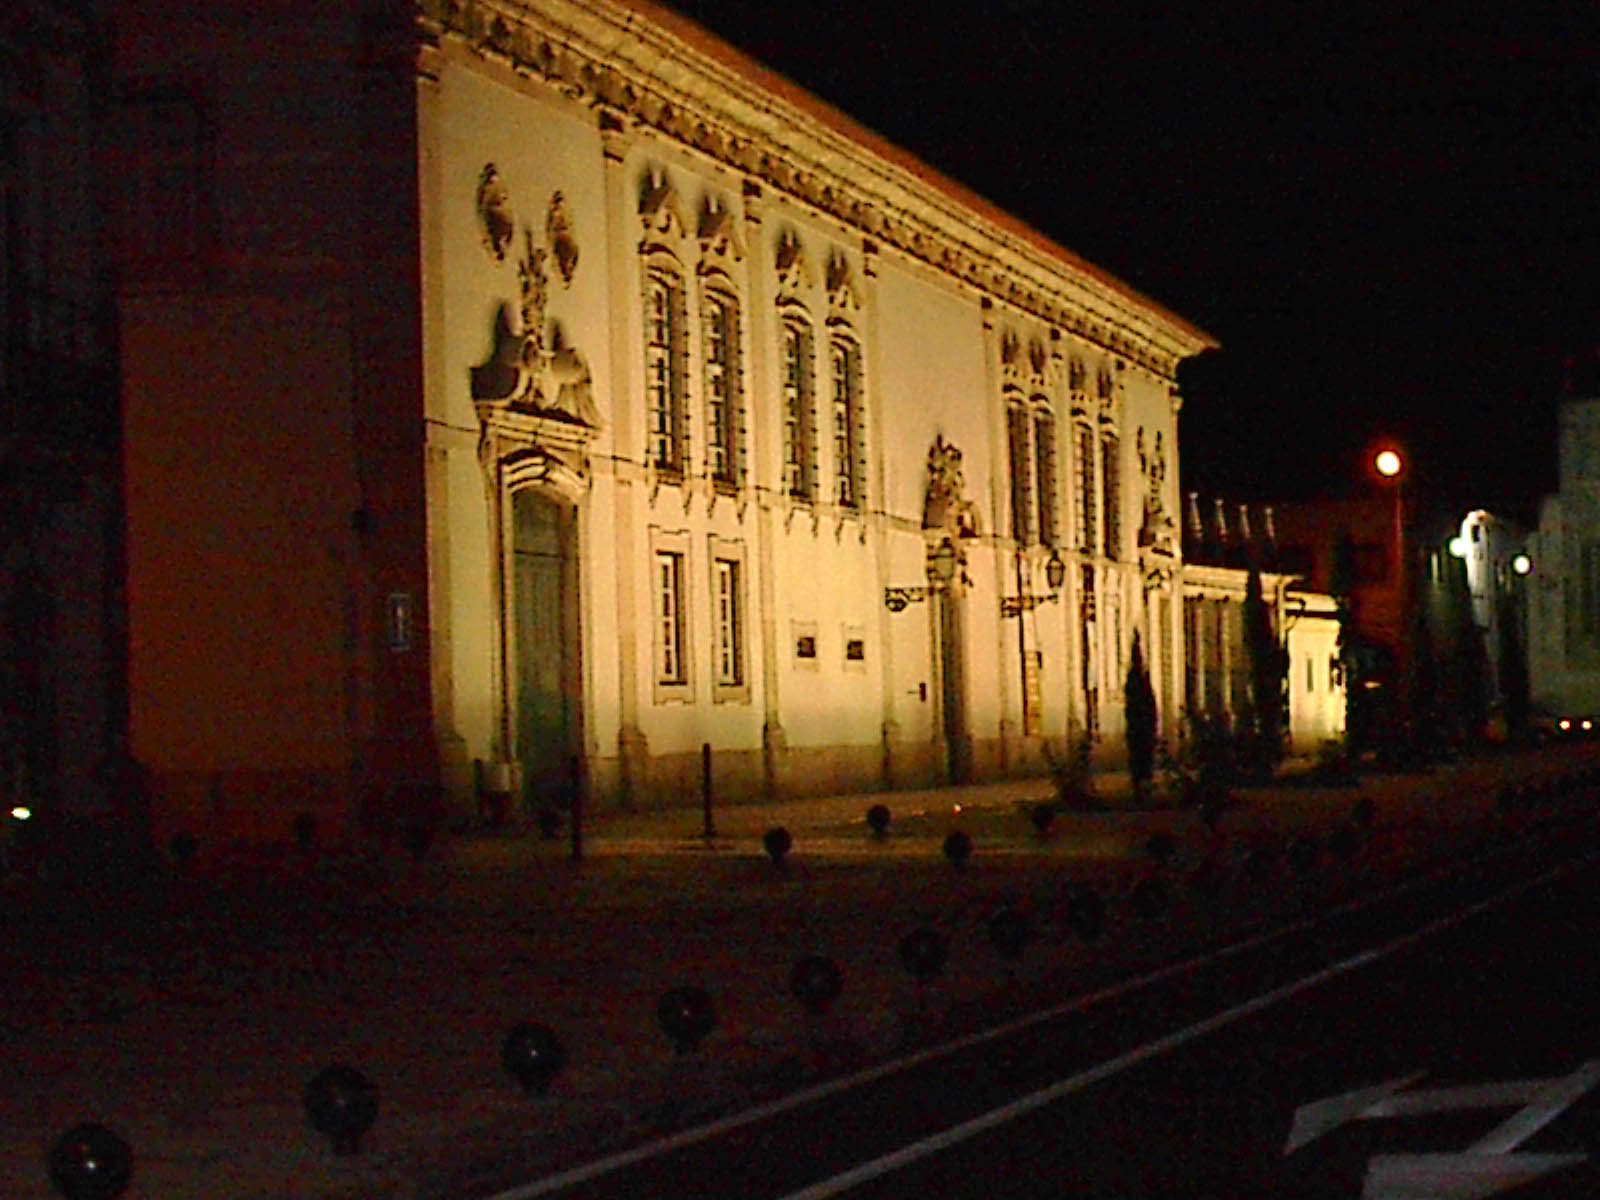 Museu de Aveiro